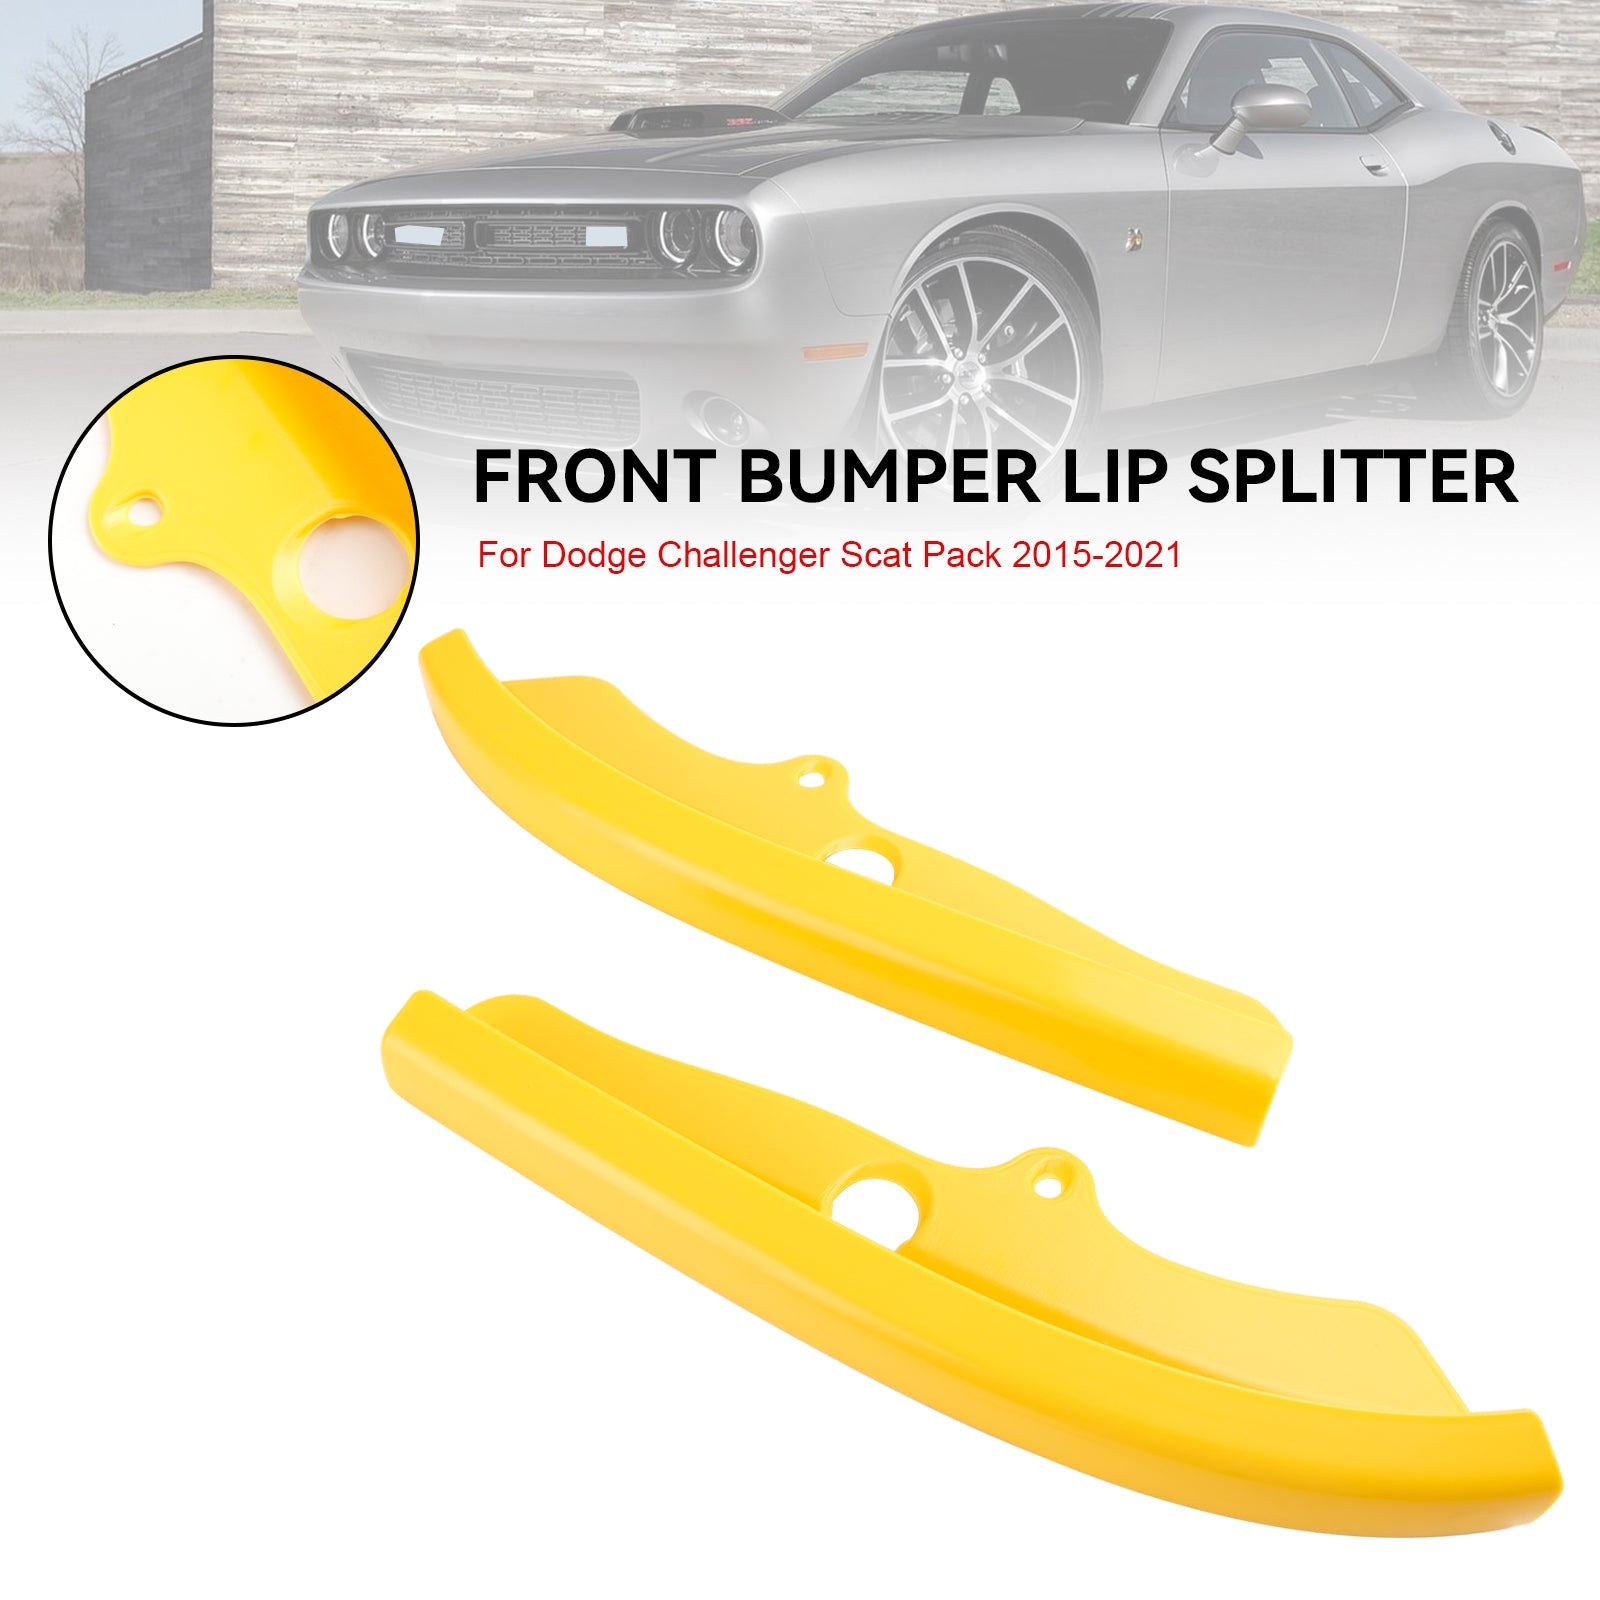 Protector divisor de labios para parachoques delantero Dodge Challenger Scat Pack 2015-2021